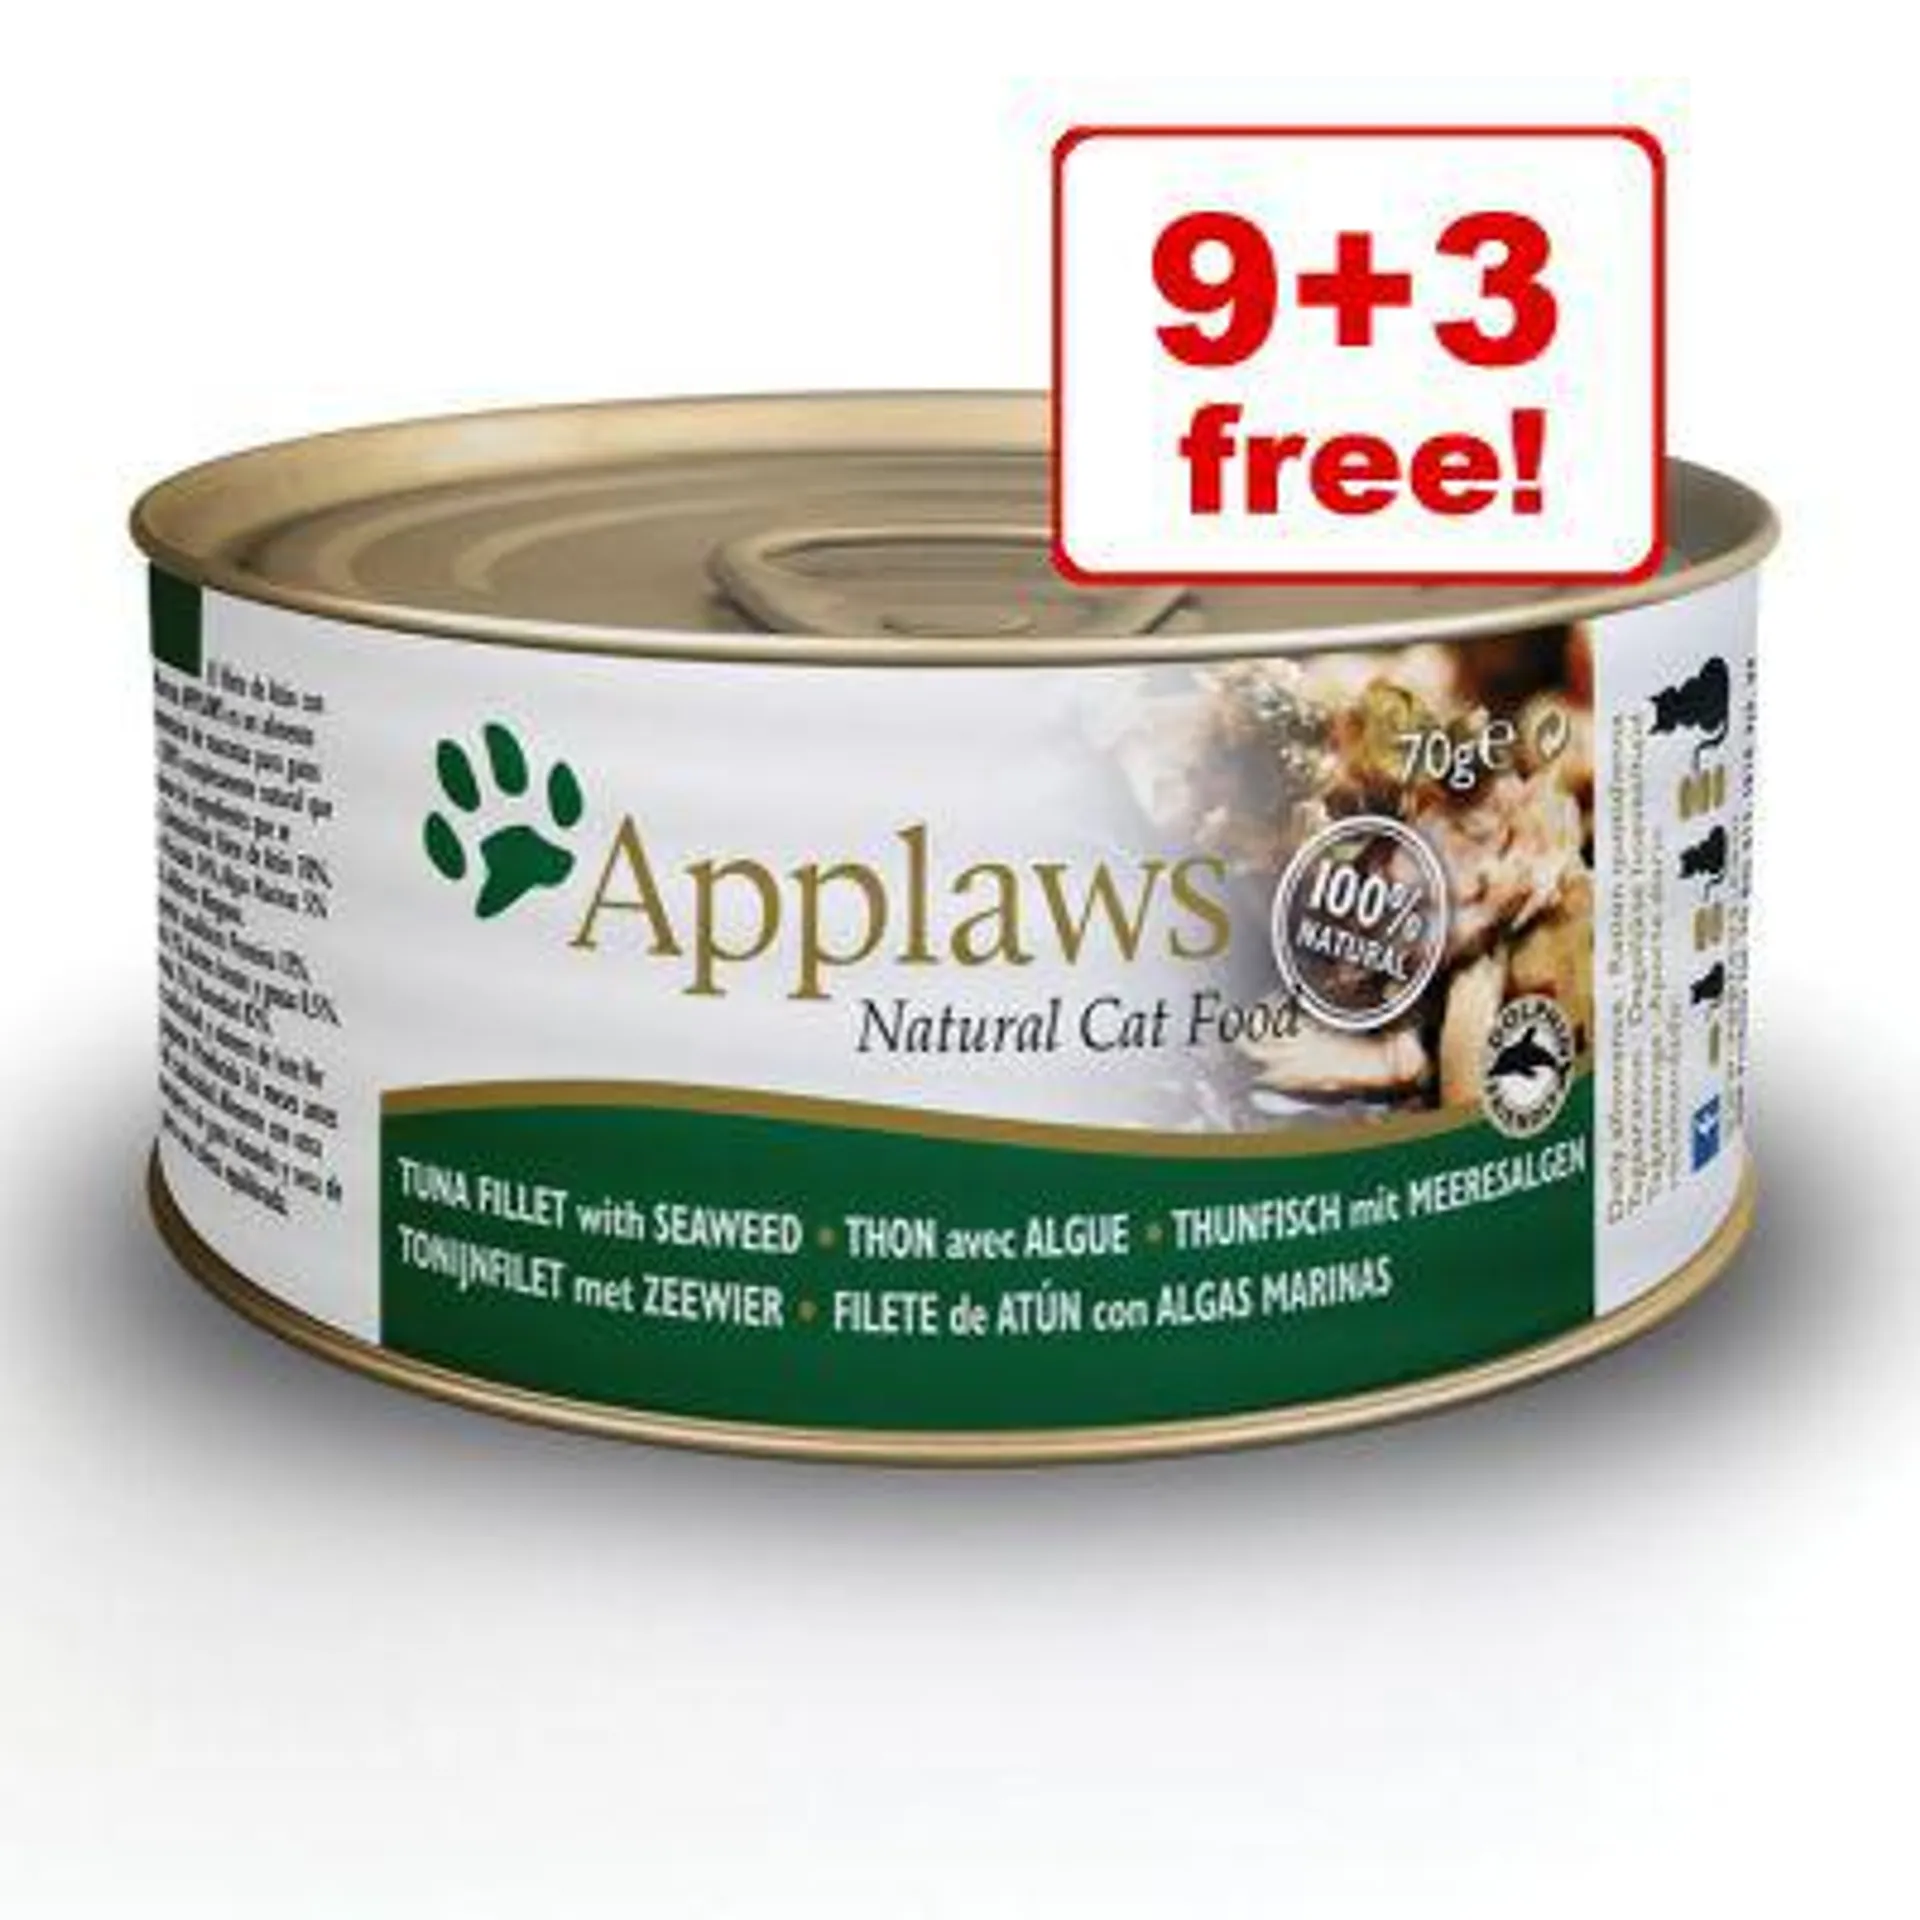 12 x 70g Applaws Wet Cat Food - 9 + 3 Free!*